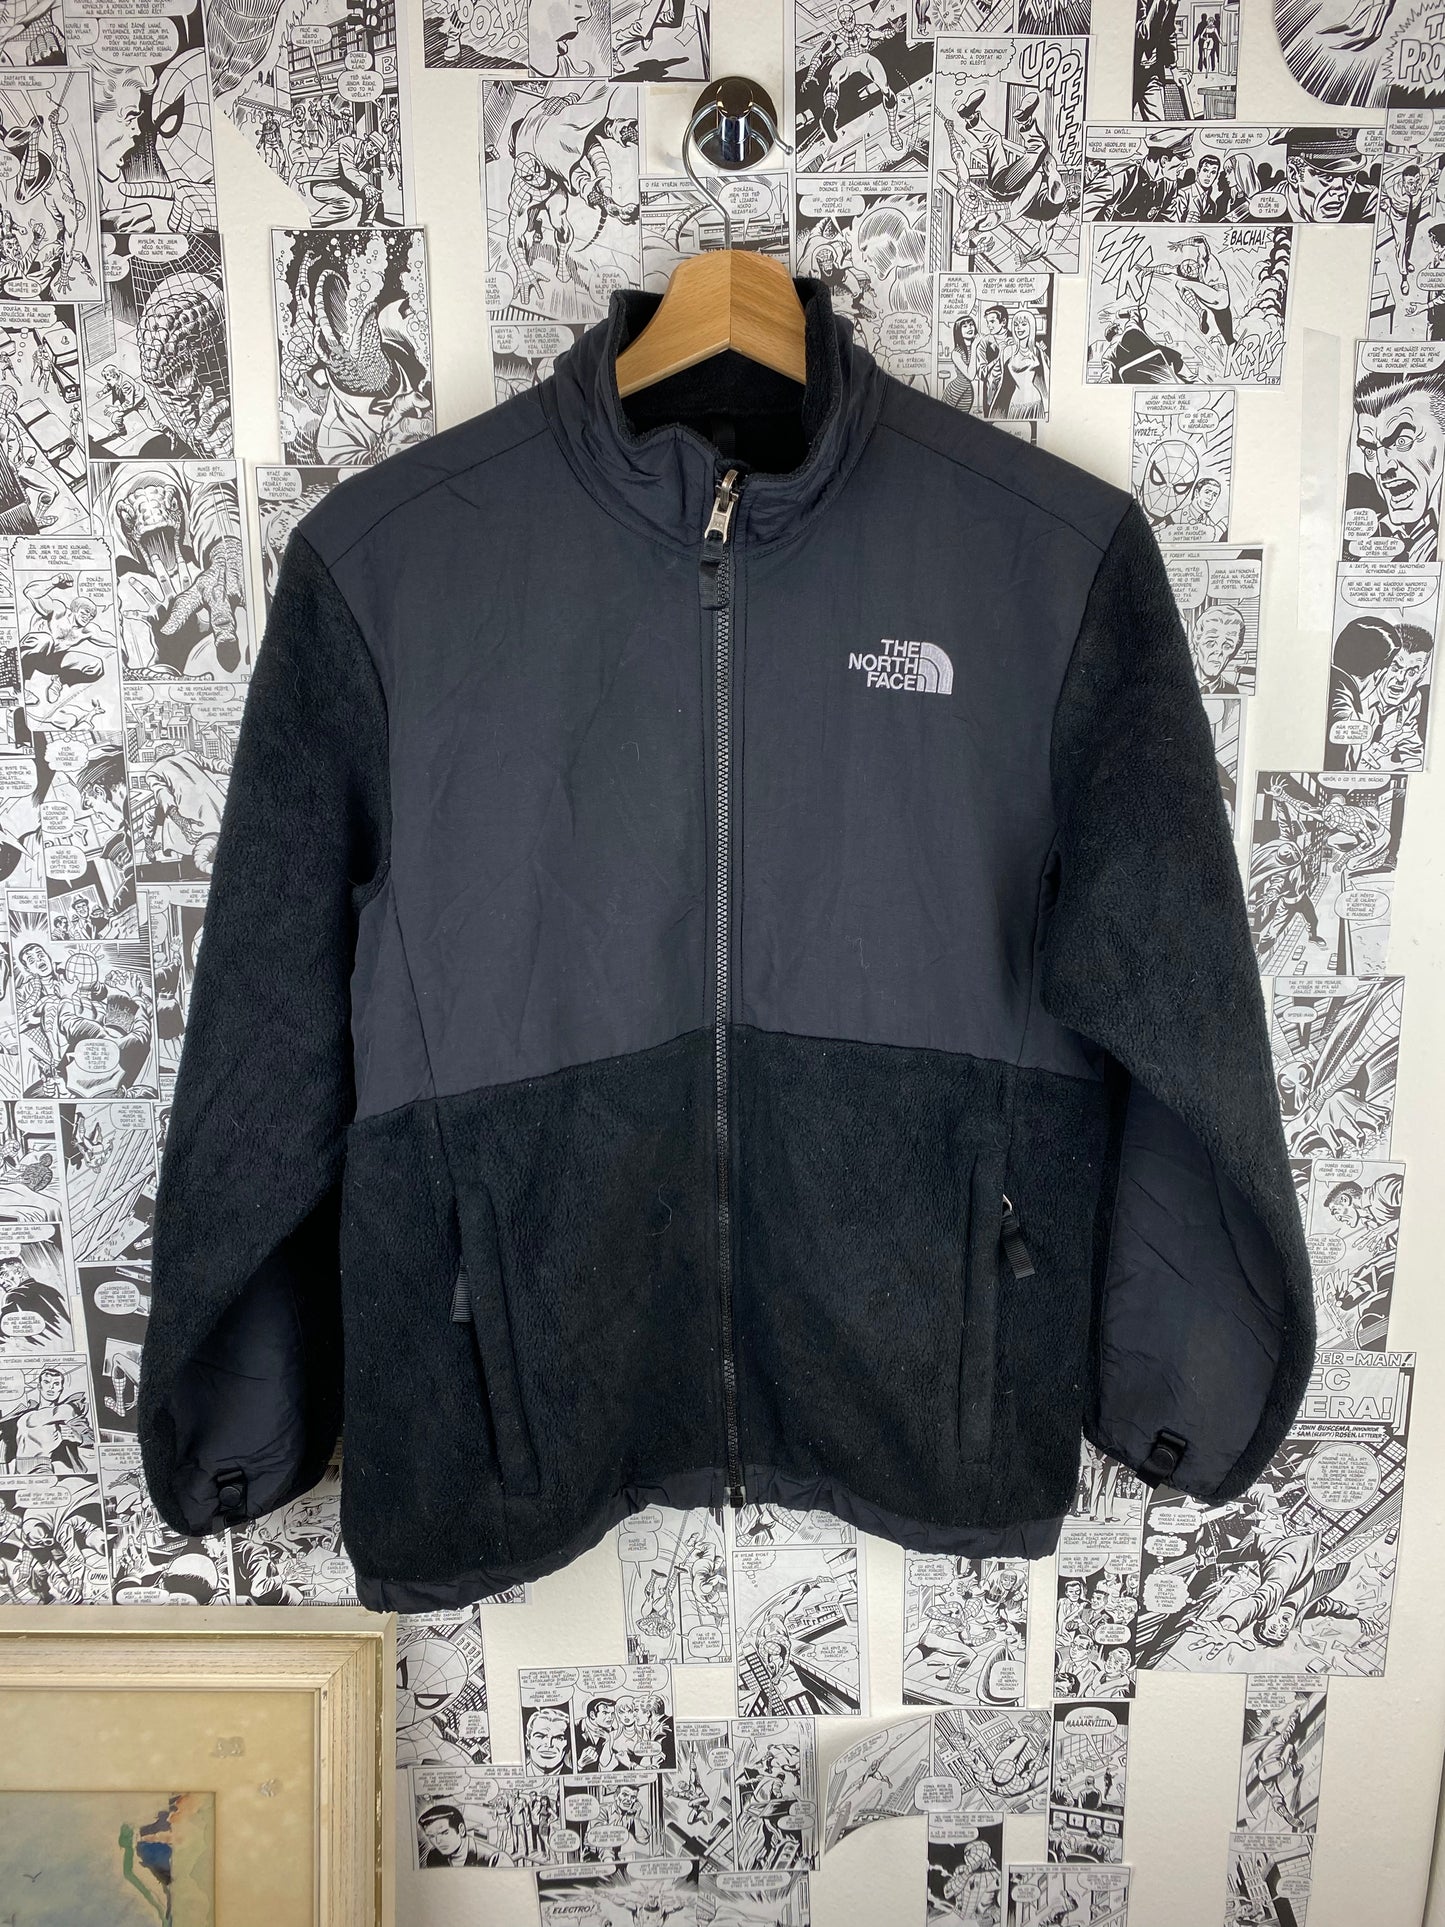 The North Face - Denali Black Fleece Jacket - size M